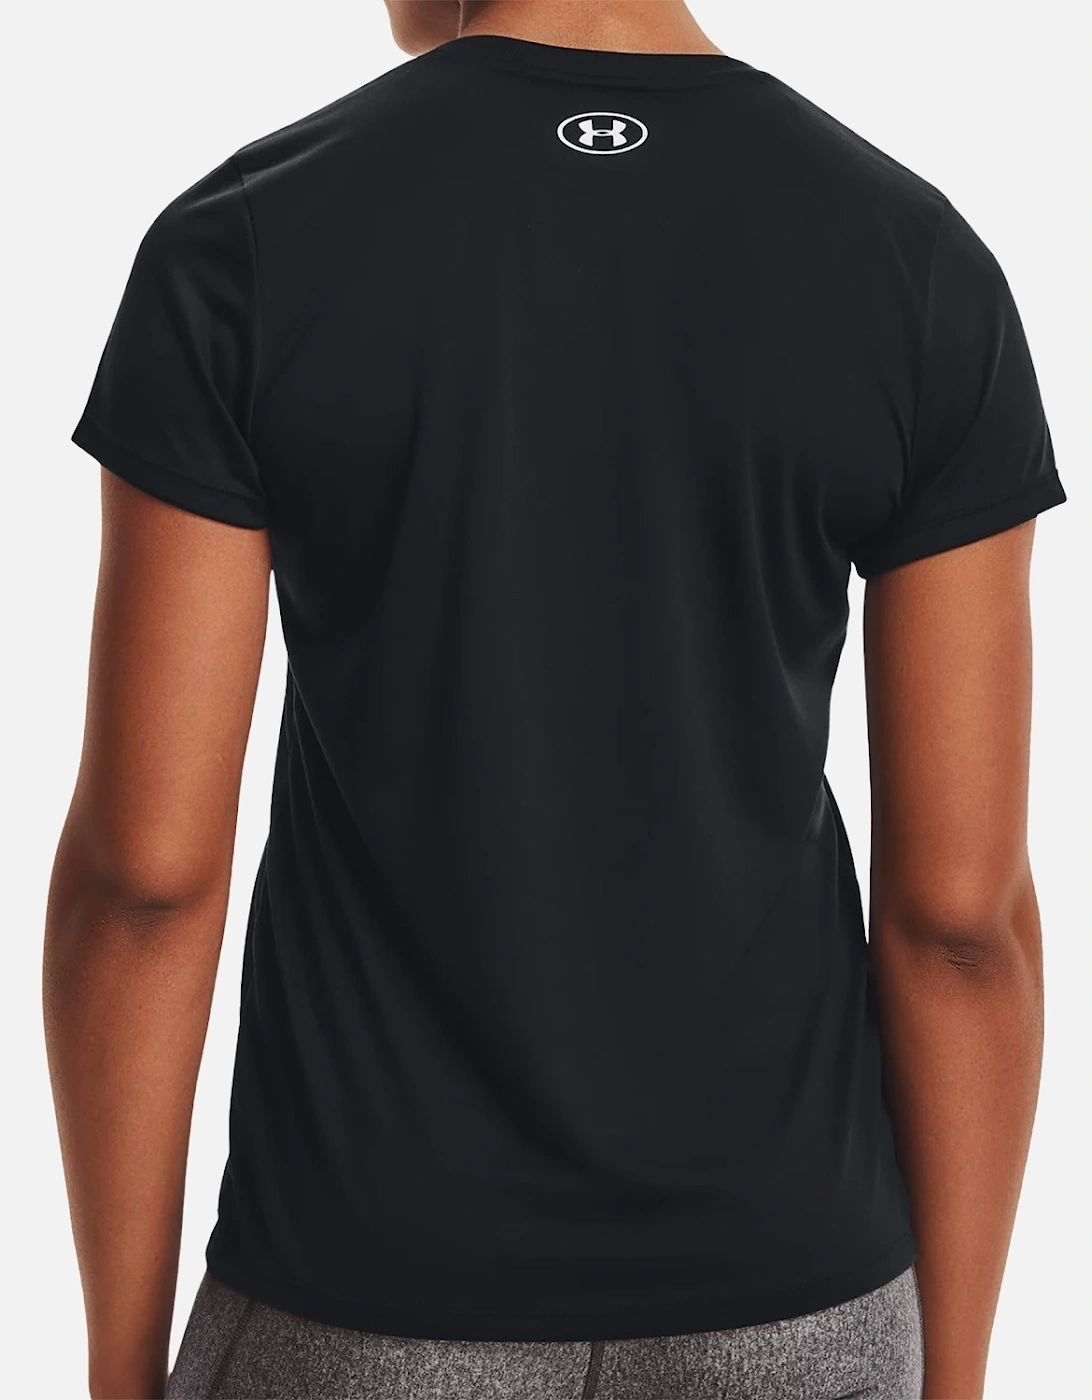 Womens Tech V Neck T-Shirt (Black)